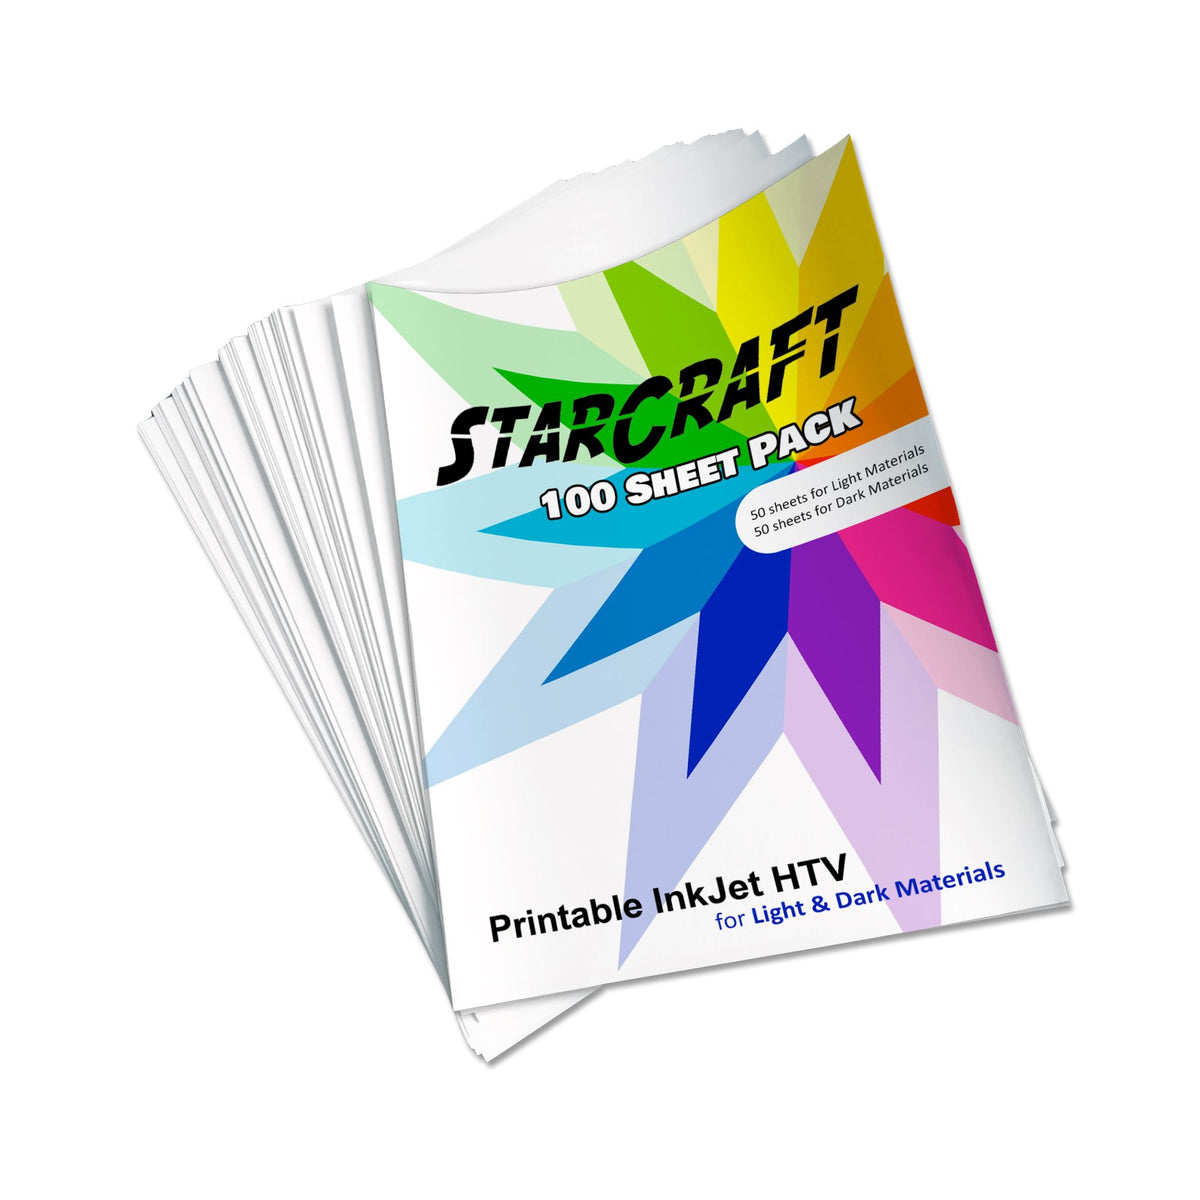 Starcraft Inkjet Printable Heat Transfer Sheet Pack